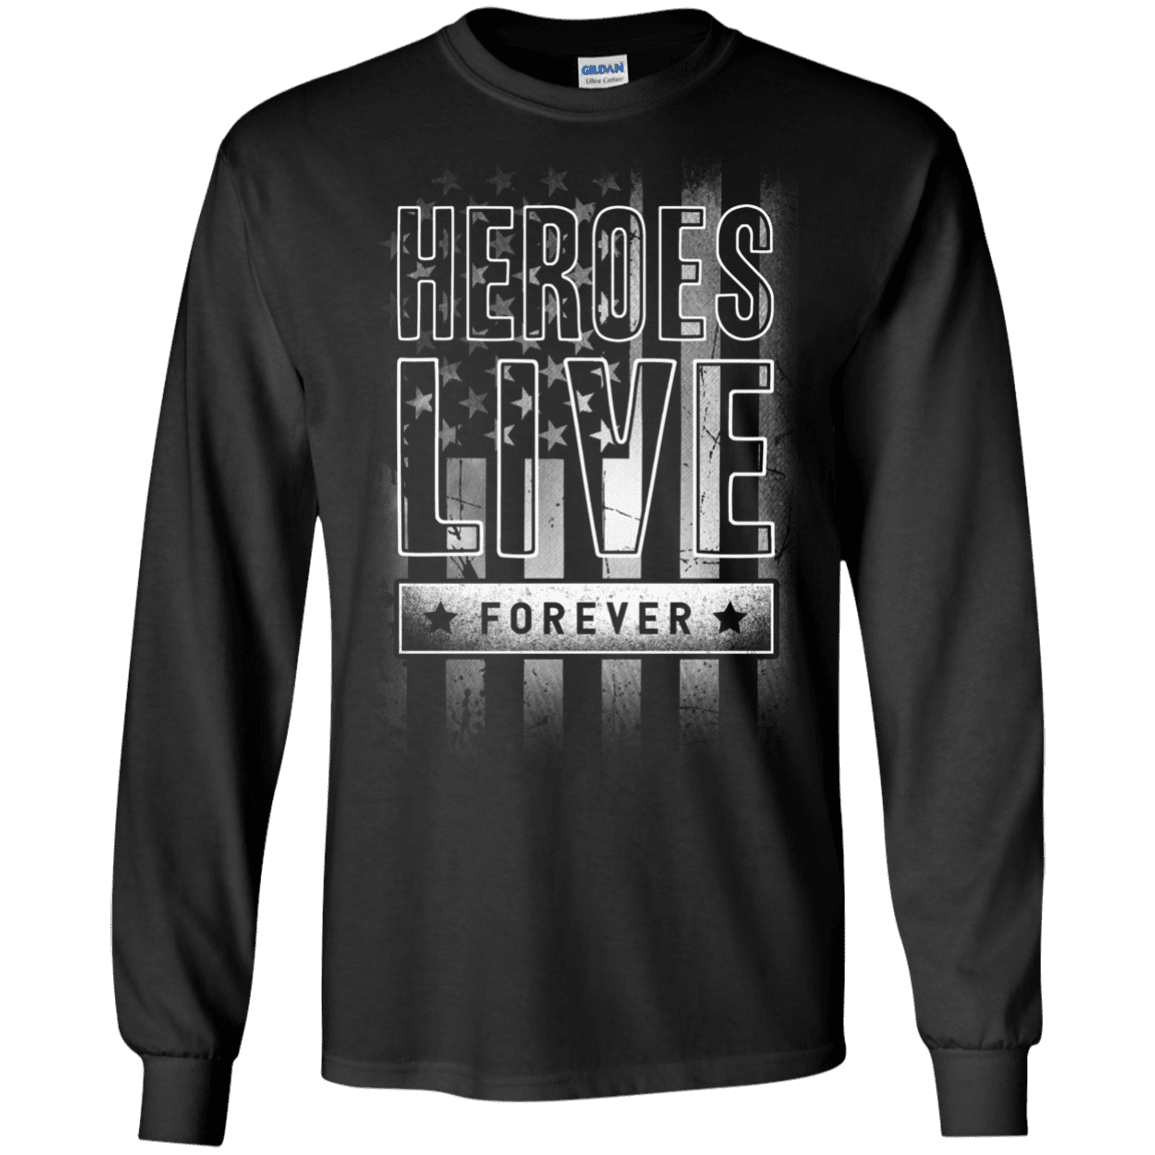 Military T-Shirt "Heroes Live Forever"-TShirt-General-Veterans Nation